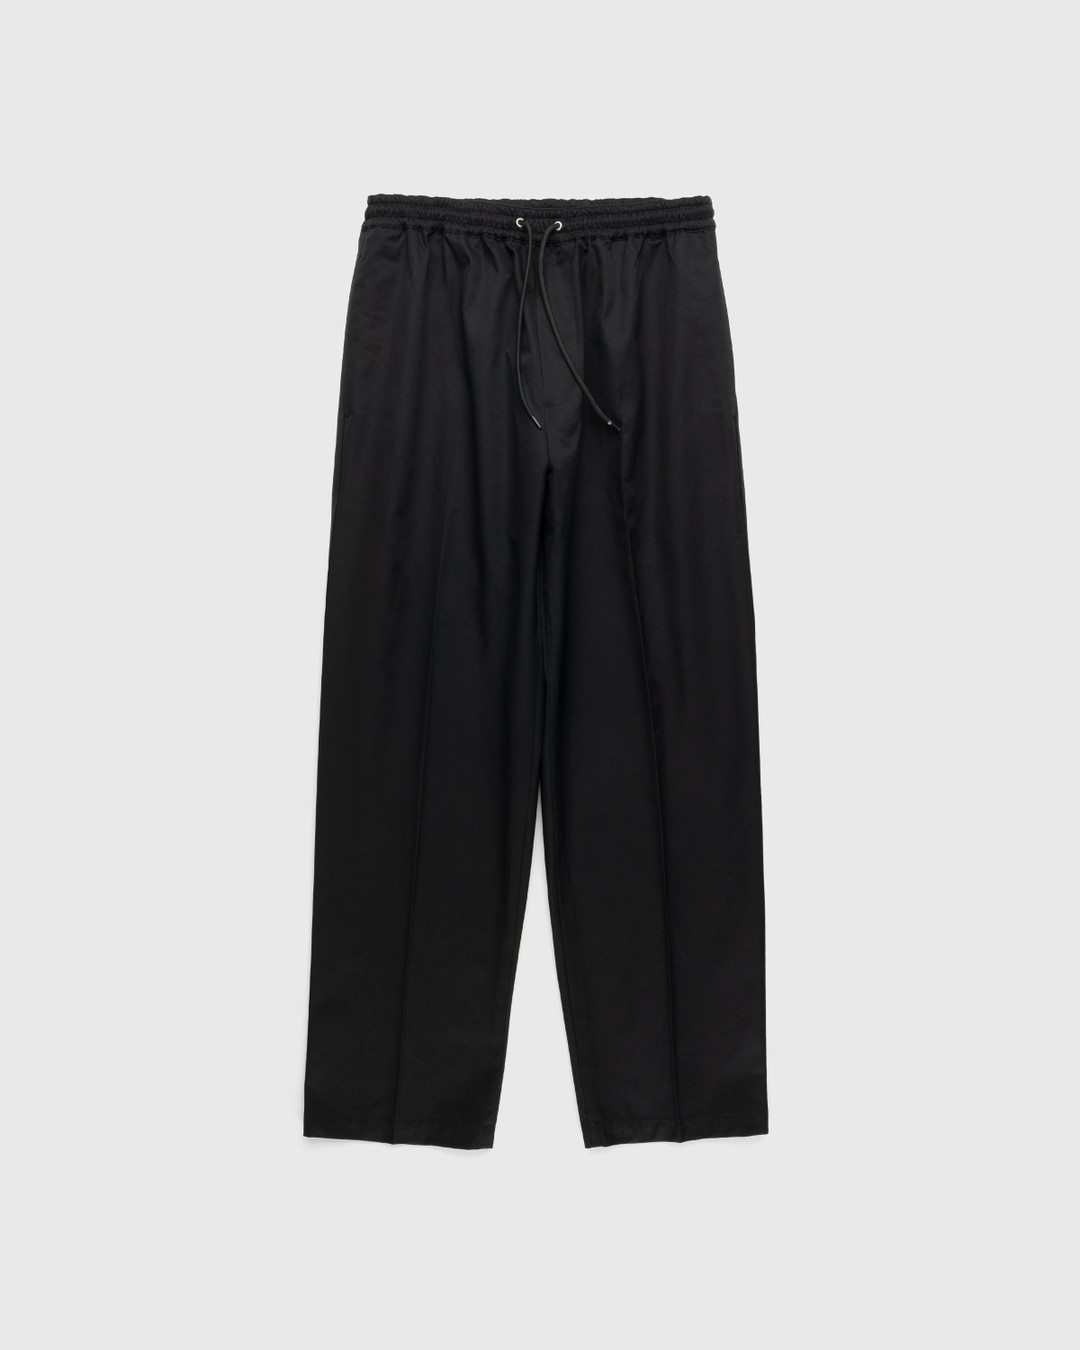 Highsnobiety – Cotton Nylon Elastic Pants Black - Pants - Black - Image 1